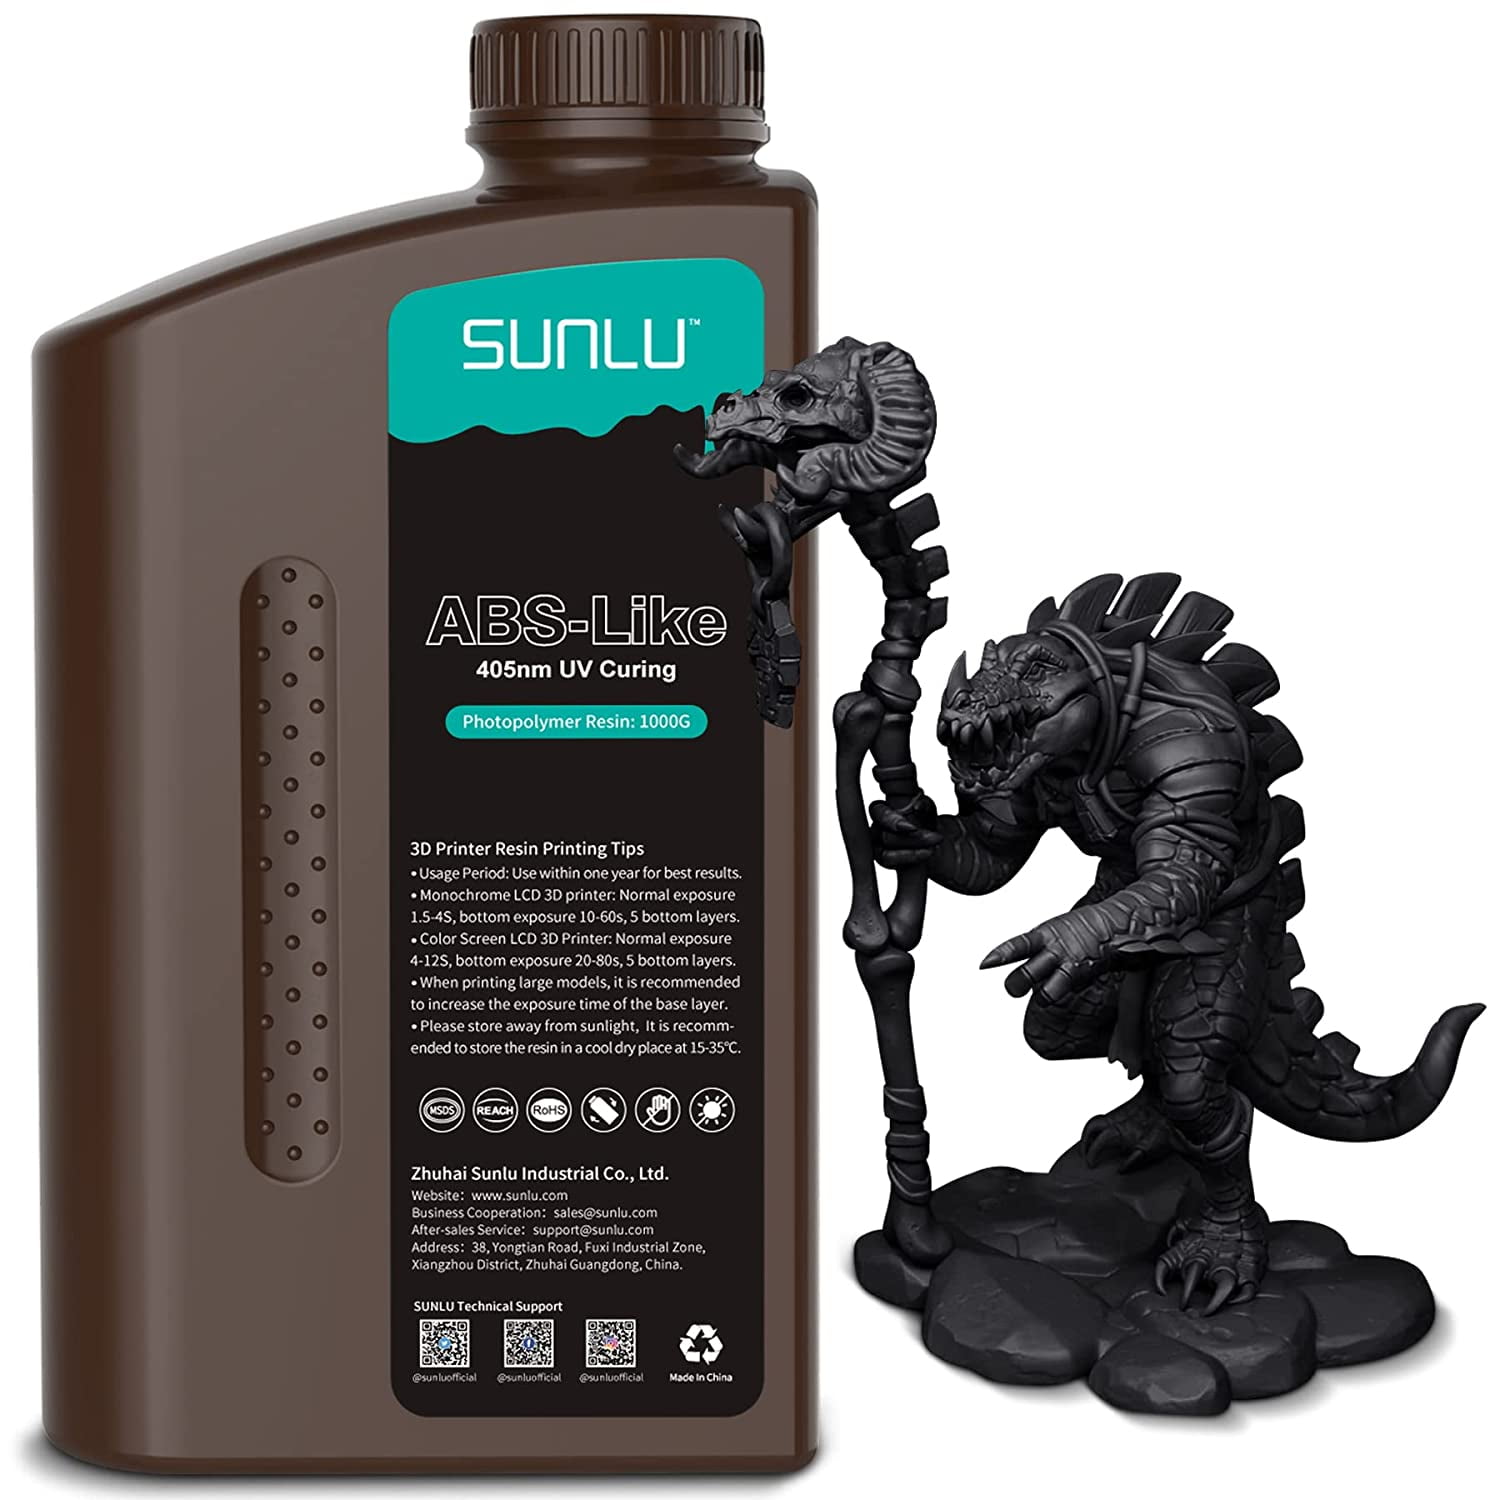 SUNLU ABS-Like Resin 405nm LCD UV-Curing Resin